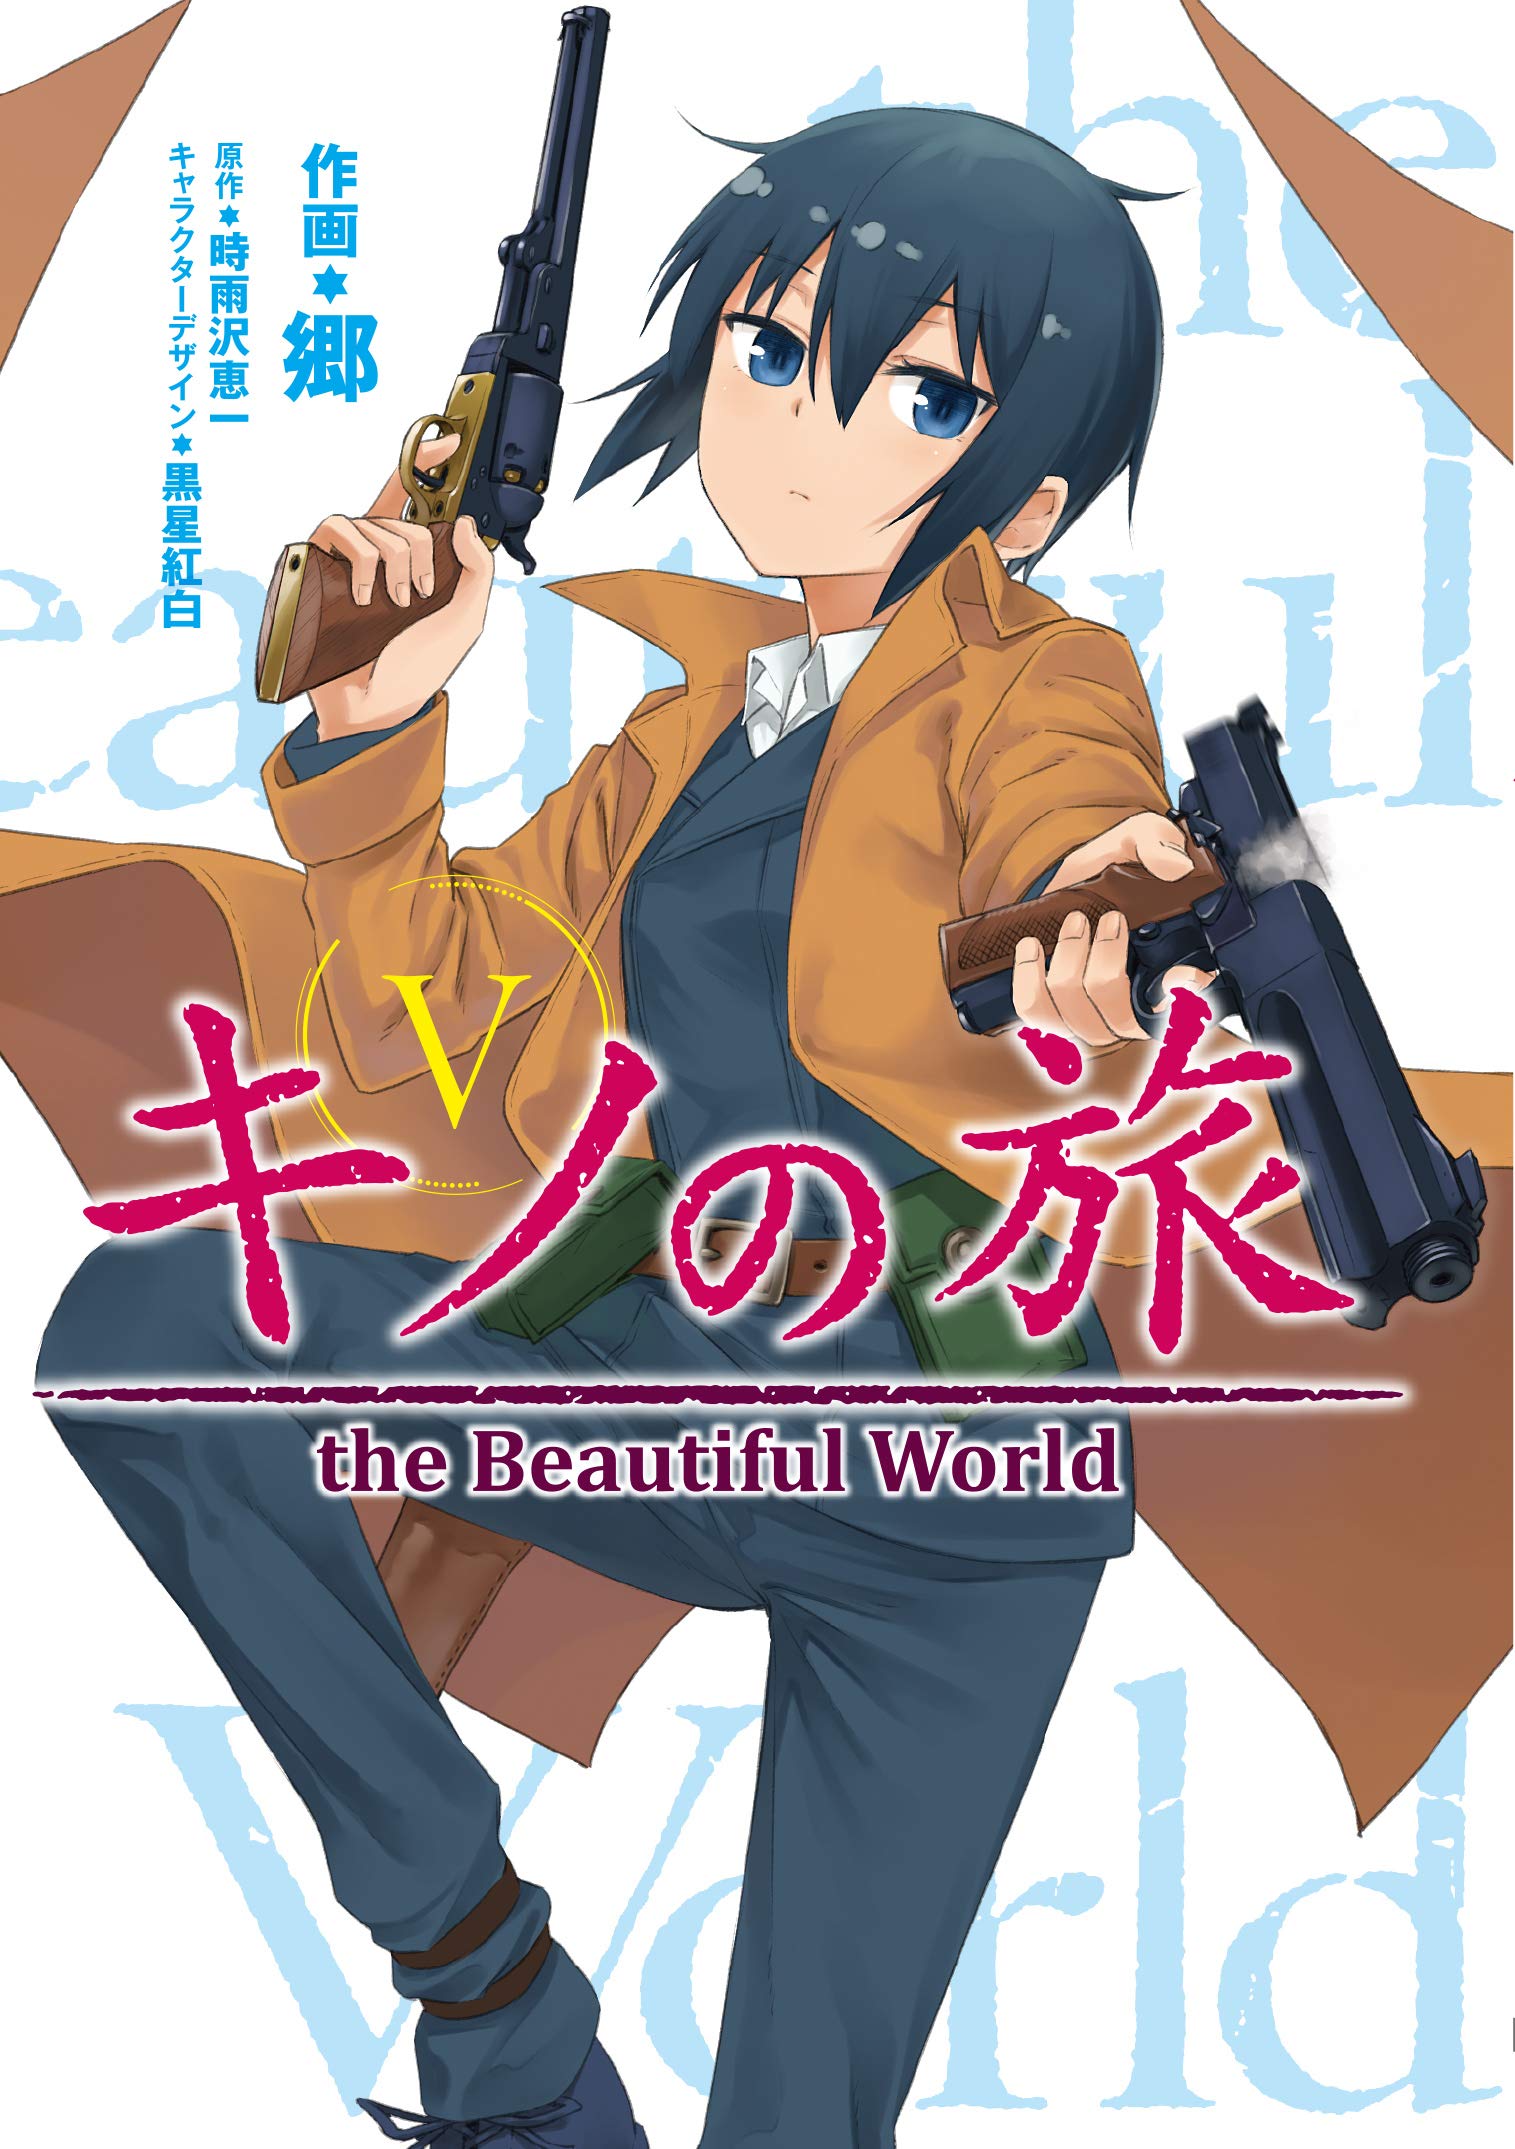 Kino no Tabi: the Beautiful World (Kino's Journey: The Beautiful World) ·  AniList